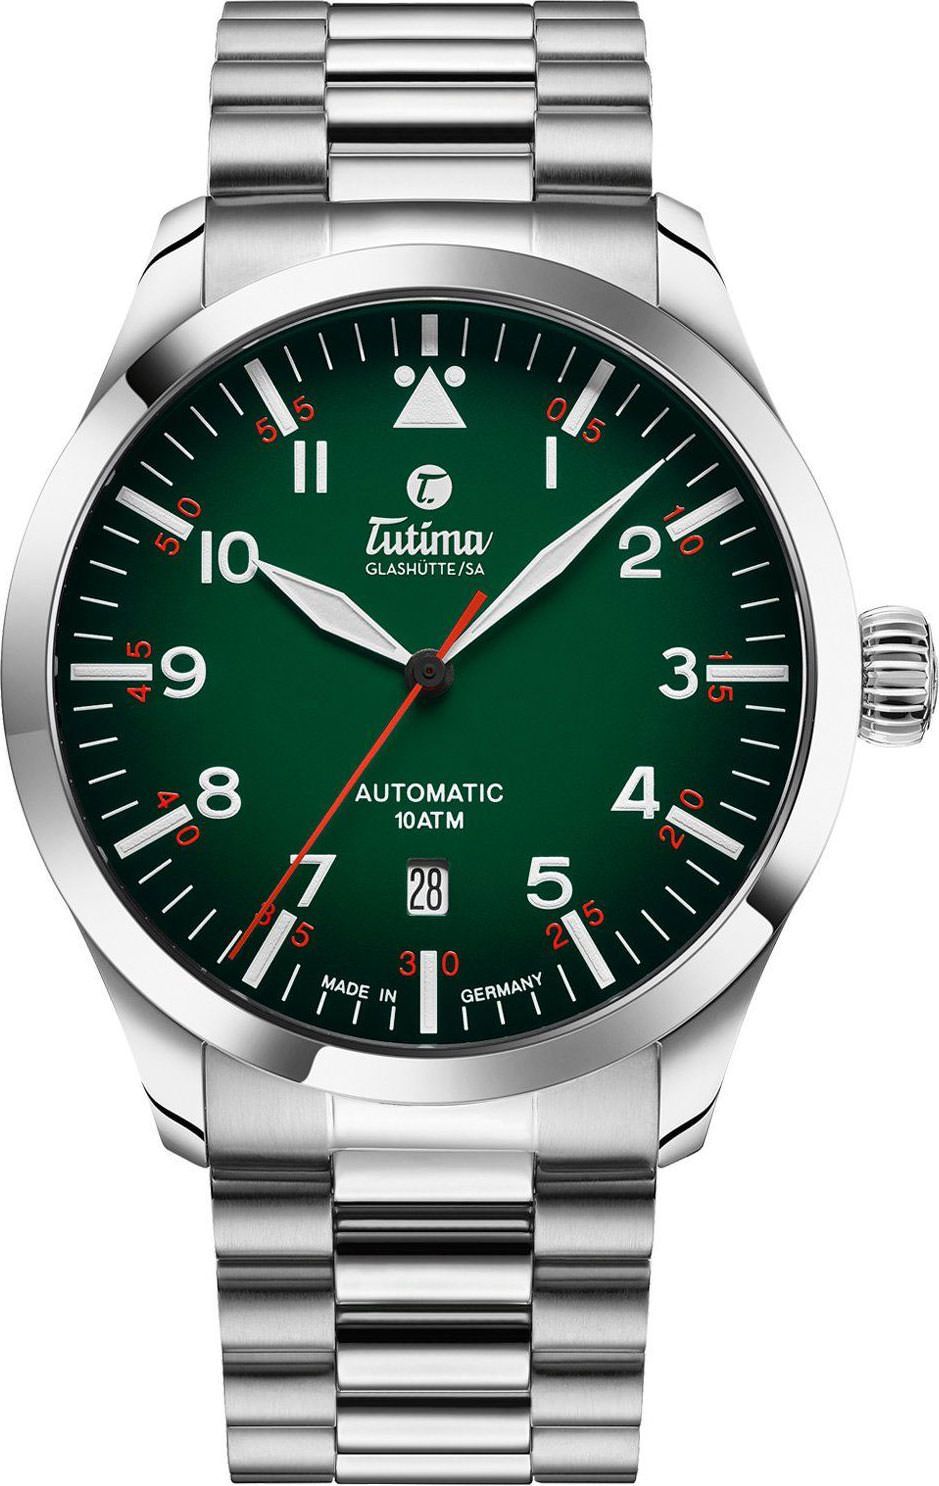 Tutima Glashütte Flieger Automatic 41 mm Watch in Green Dial For Men - 1